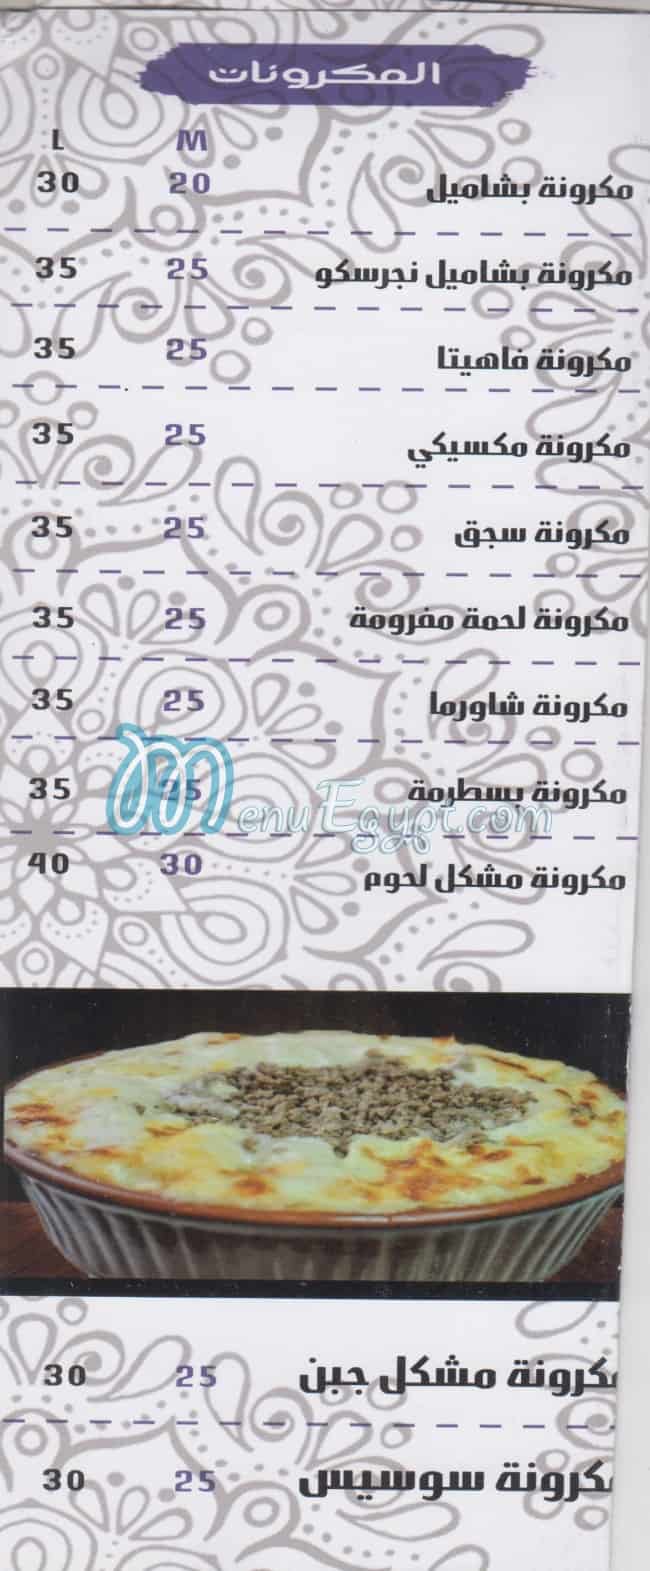 El Gawhara menu Egypt 4